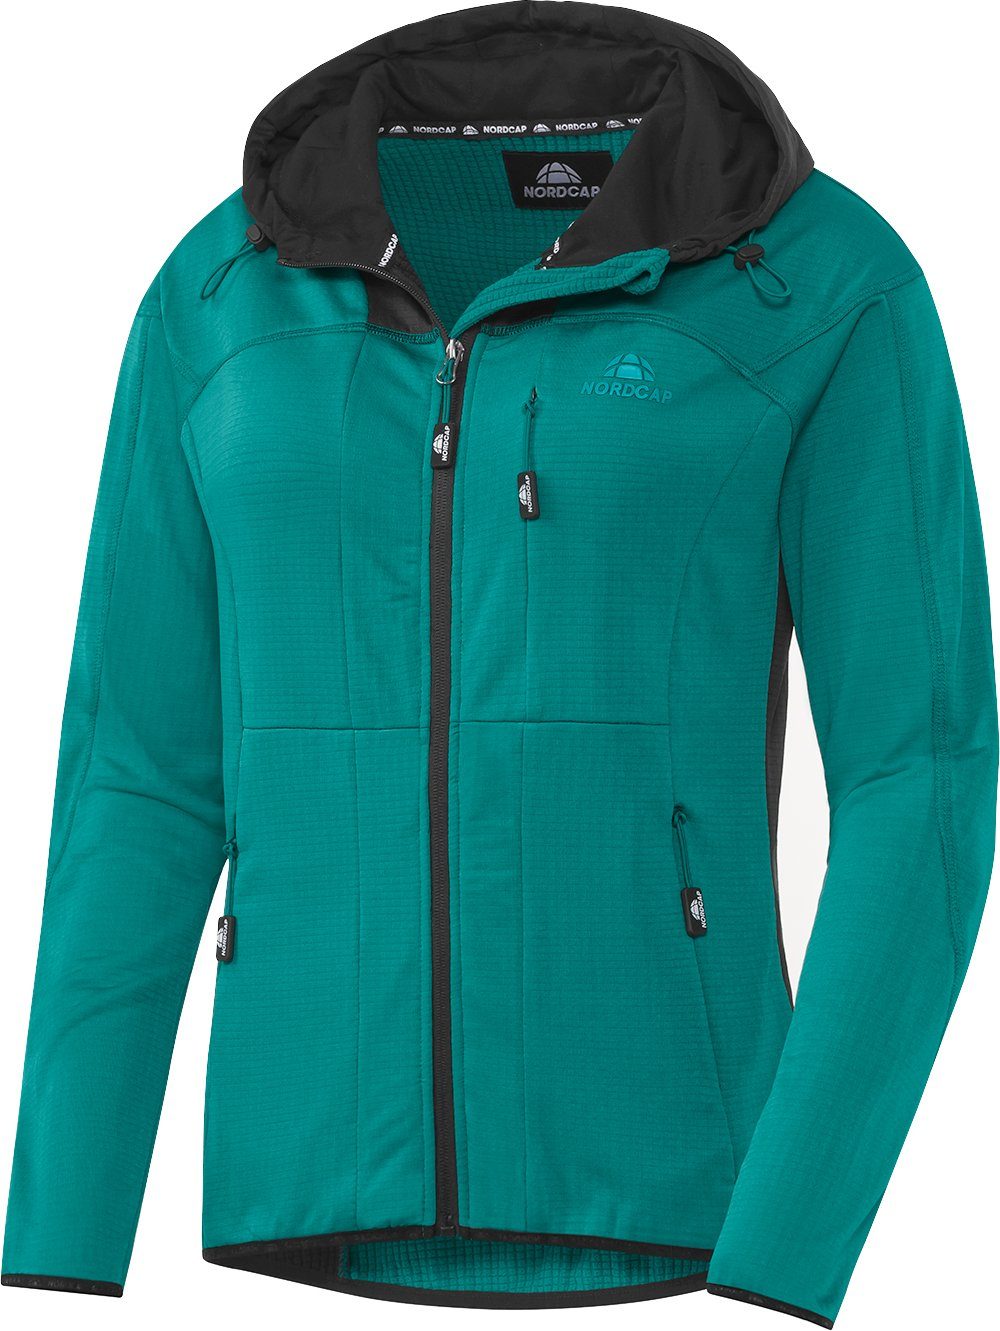 Nordcap Funktionsjacke farbstarke Kapuzen-Jacke in weicher Sweat-Qualität mint